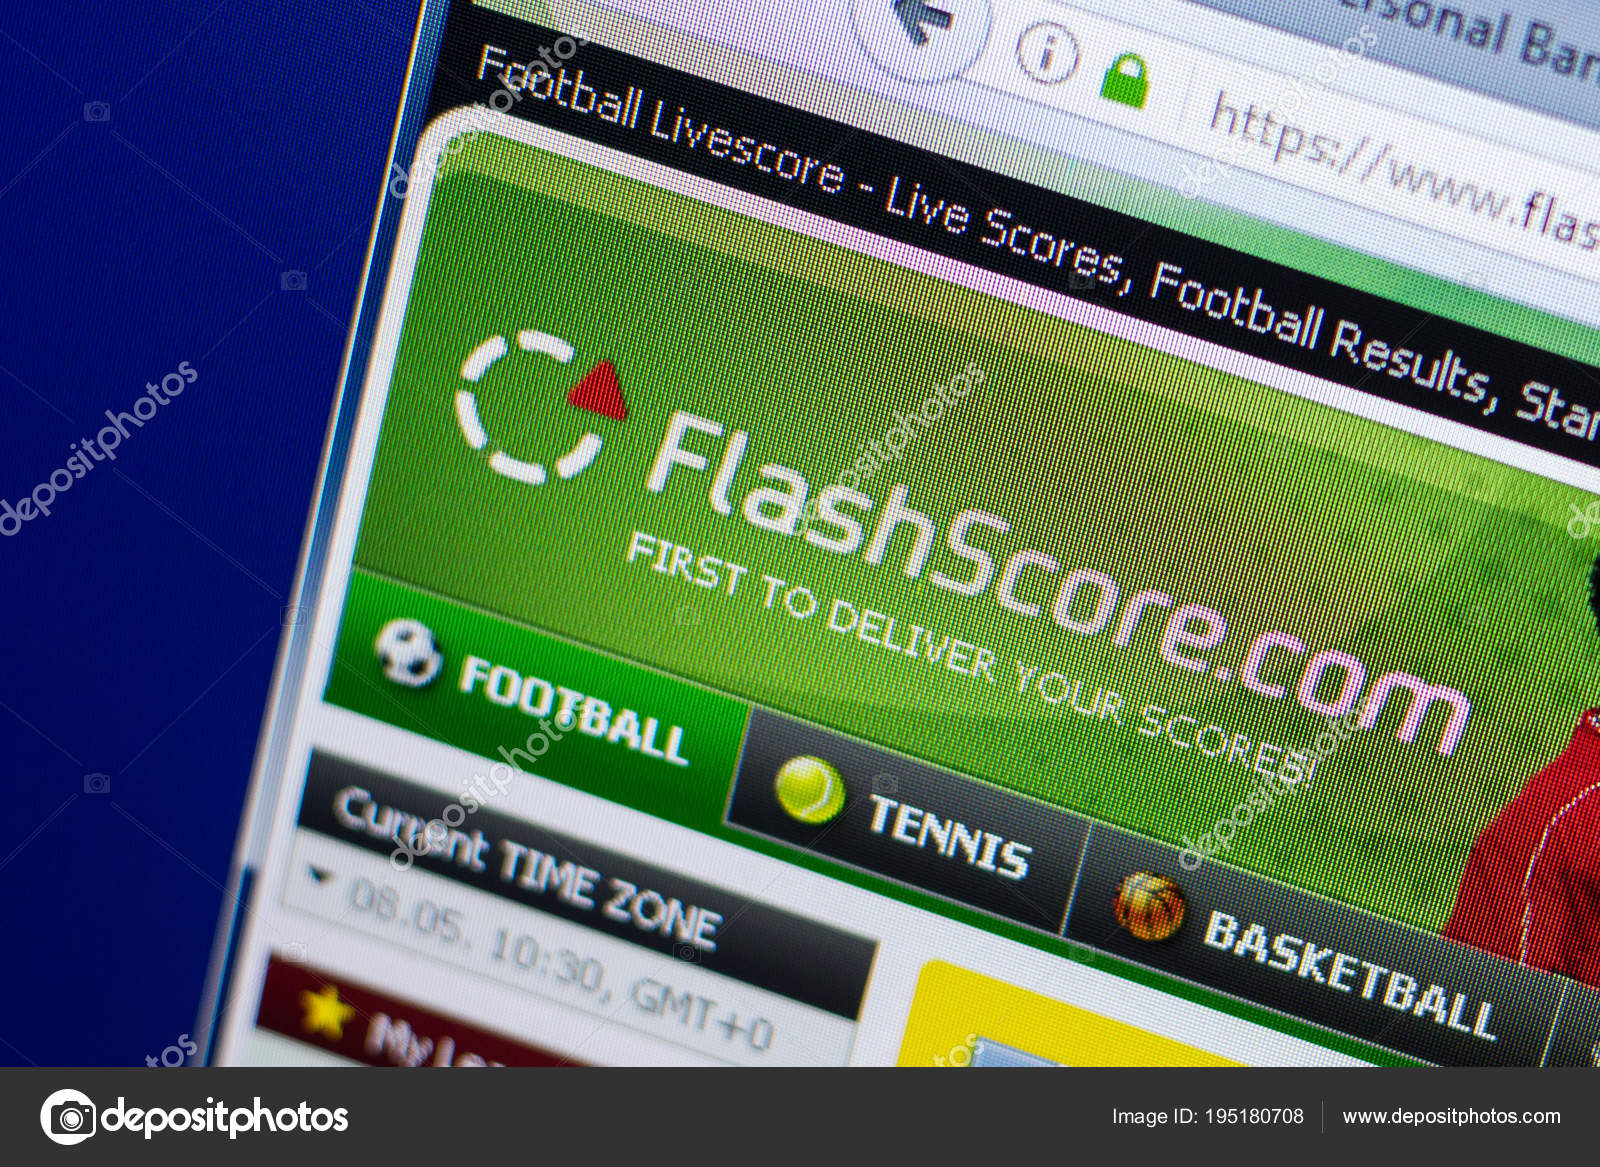 Football Live Scores Flash Sale